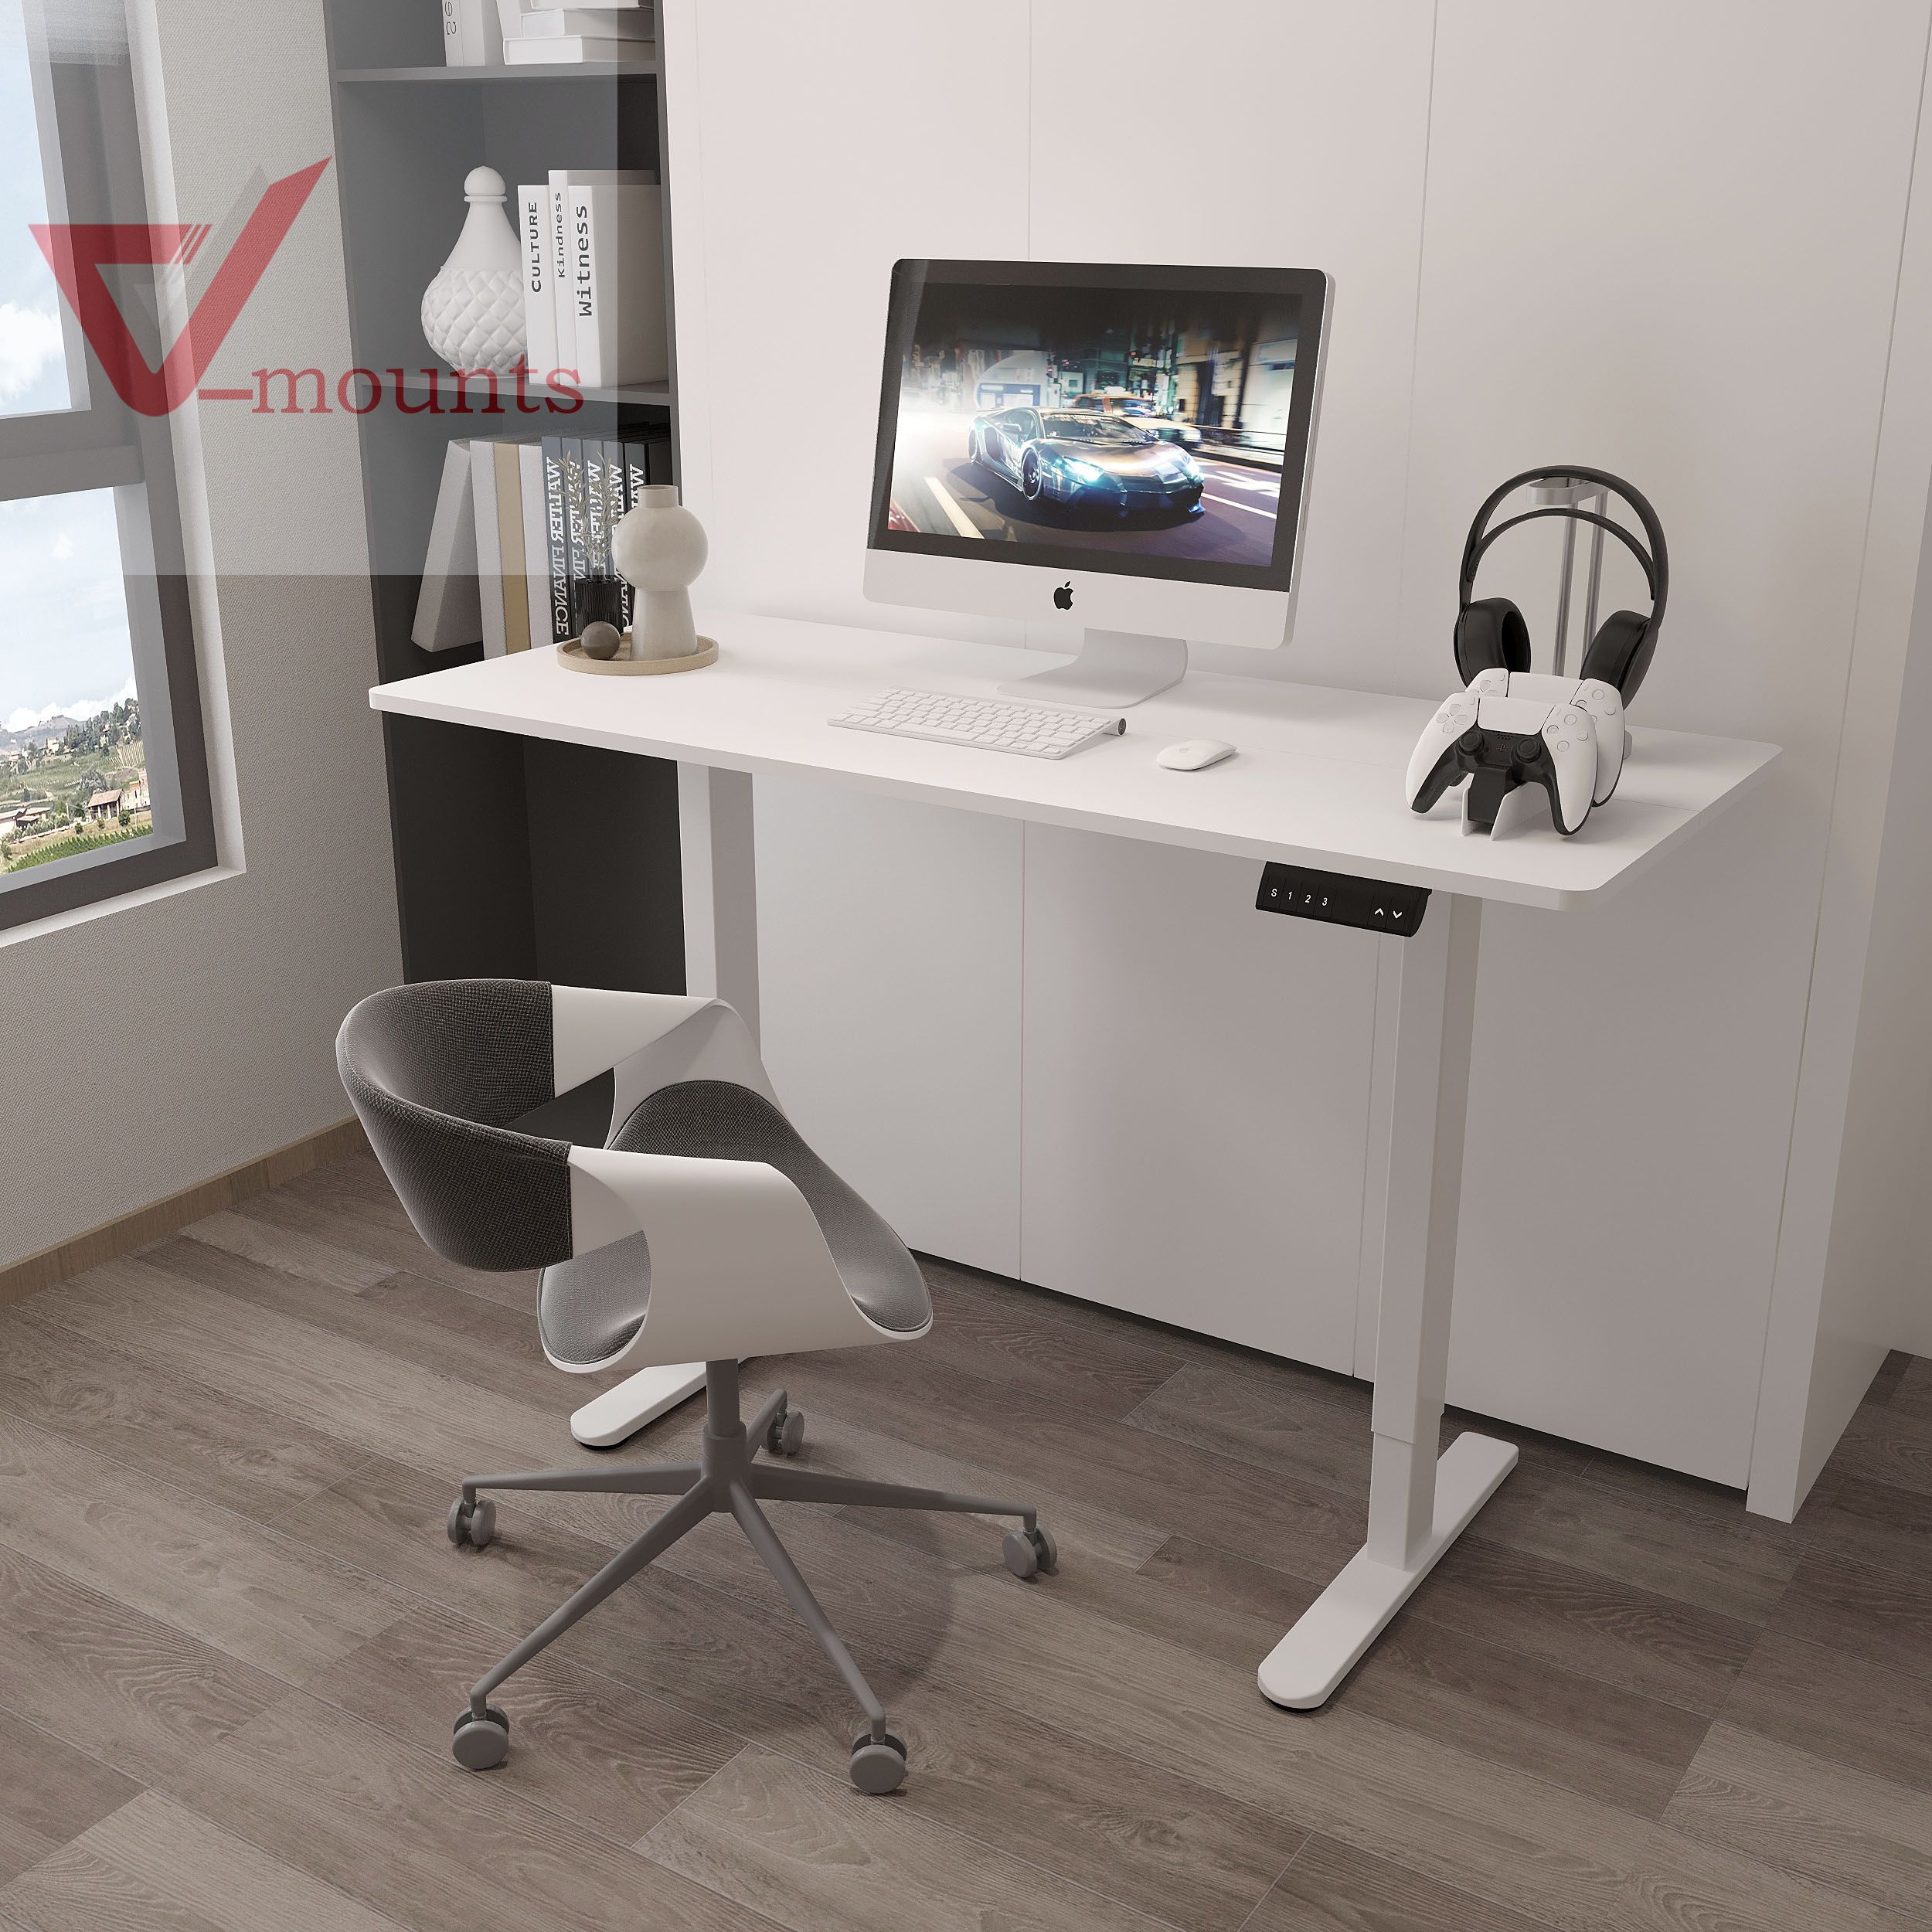 V-mounts Office Home Use Dual Motor Electric Height Adjustable Desk VM-JSD2-02-2P